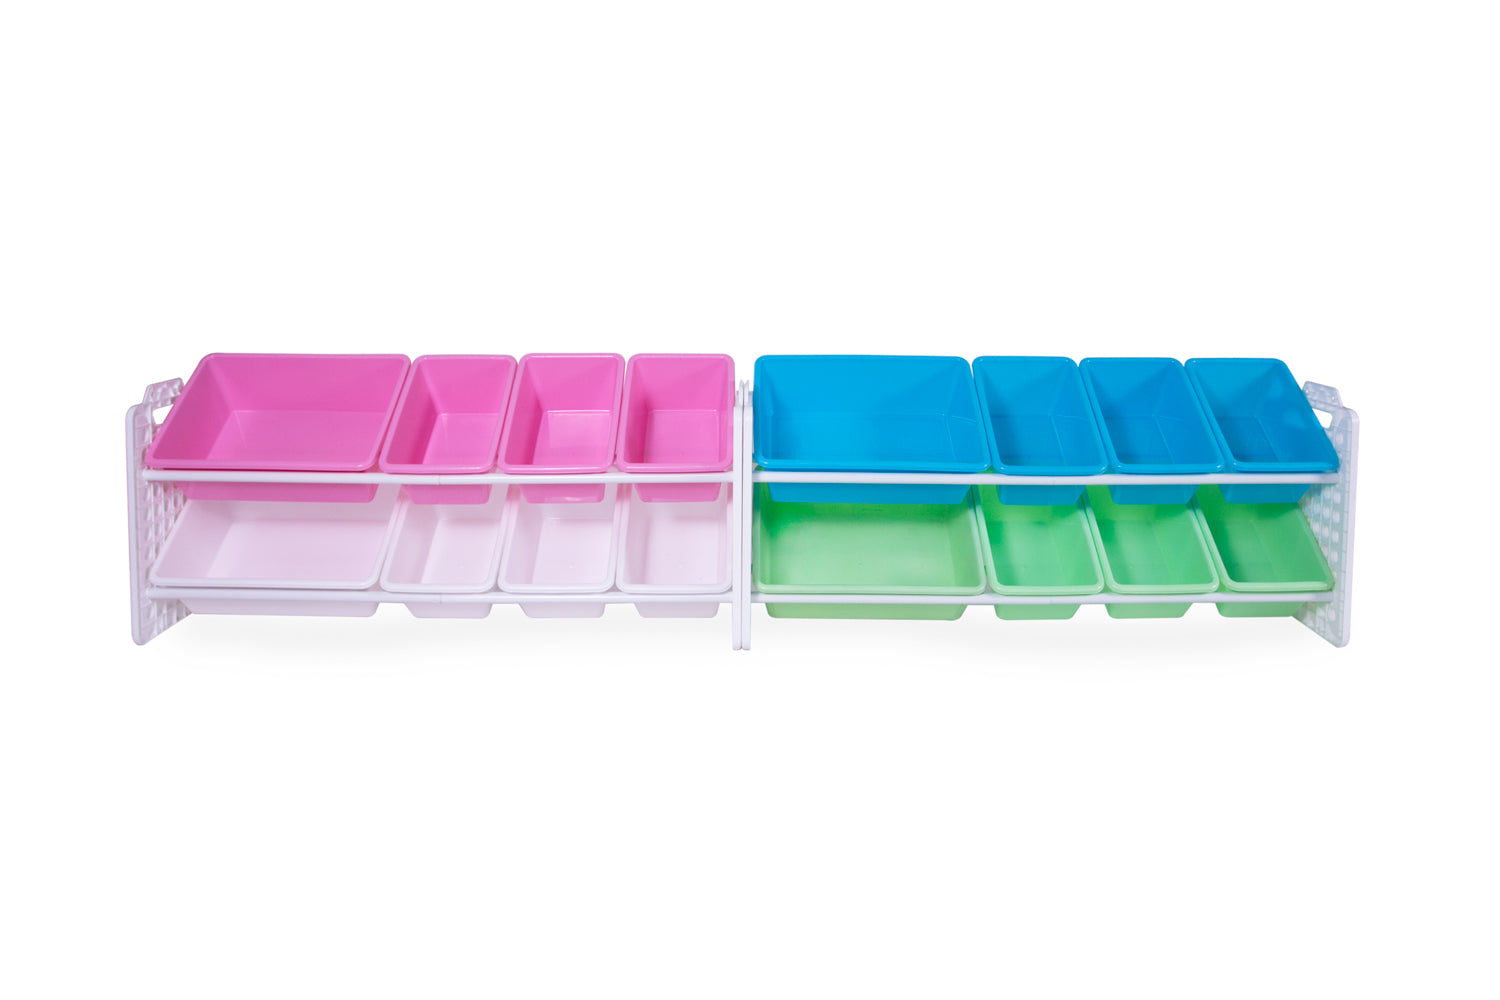 UNiPLAY 16 Bins Toy Storage Organizer - Pink (UB45731)